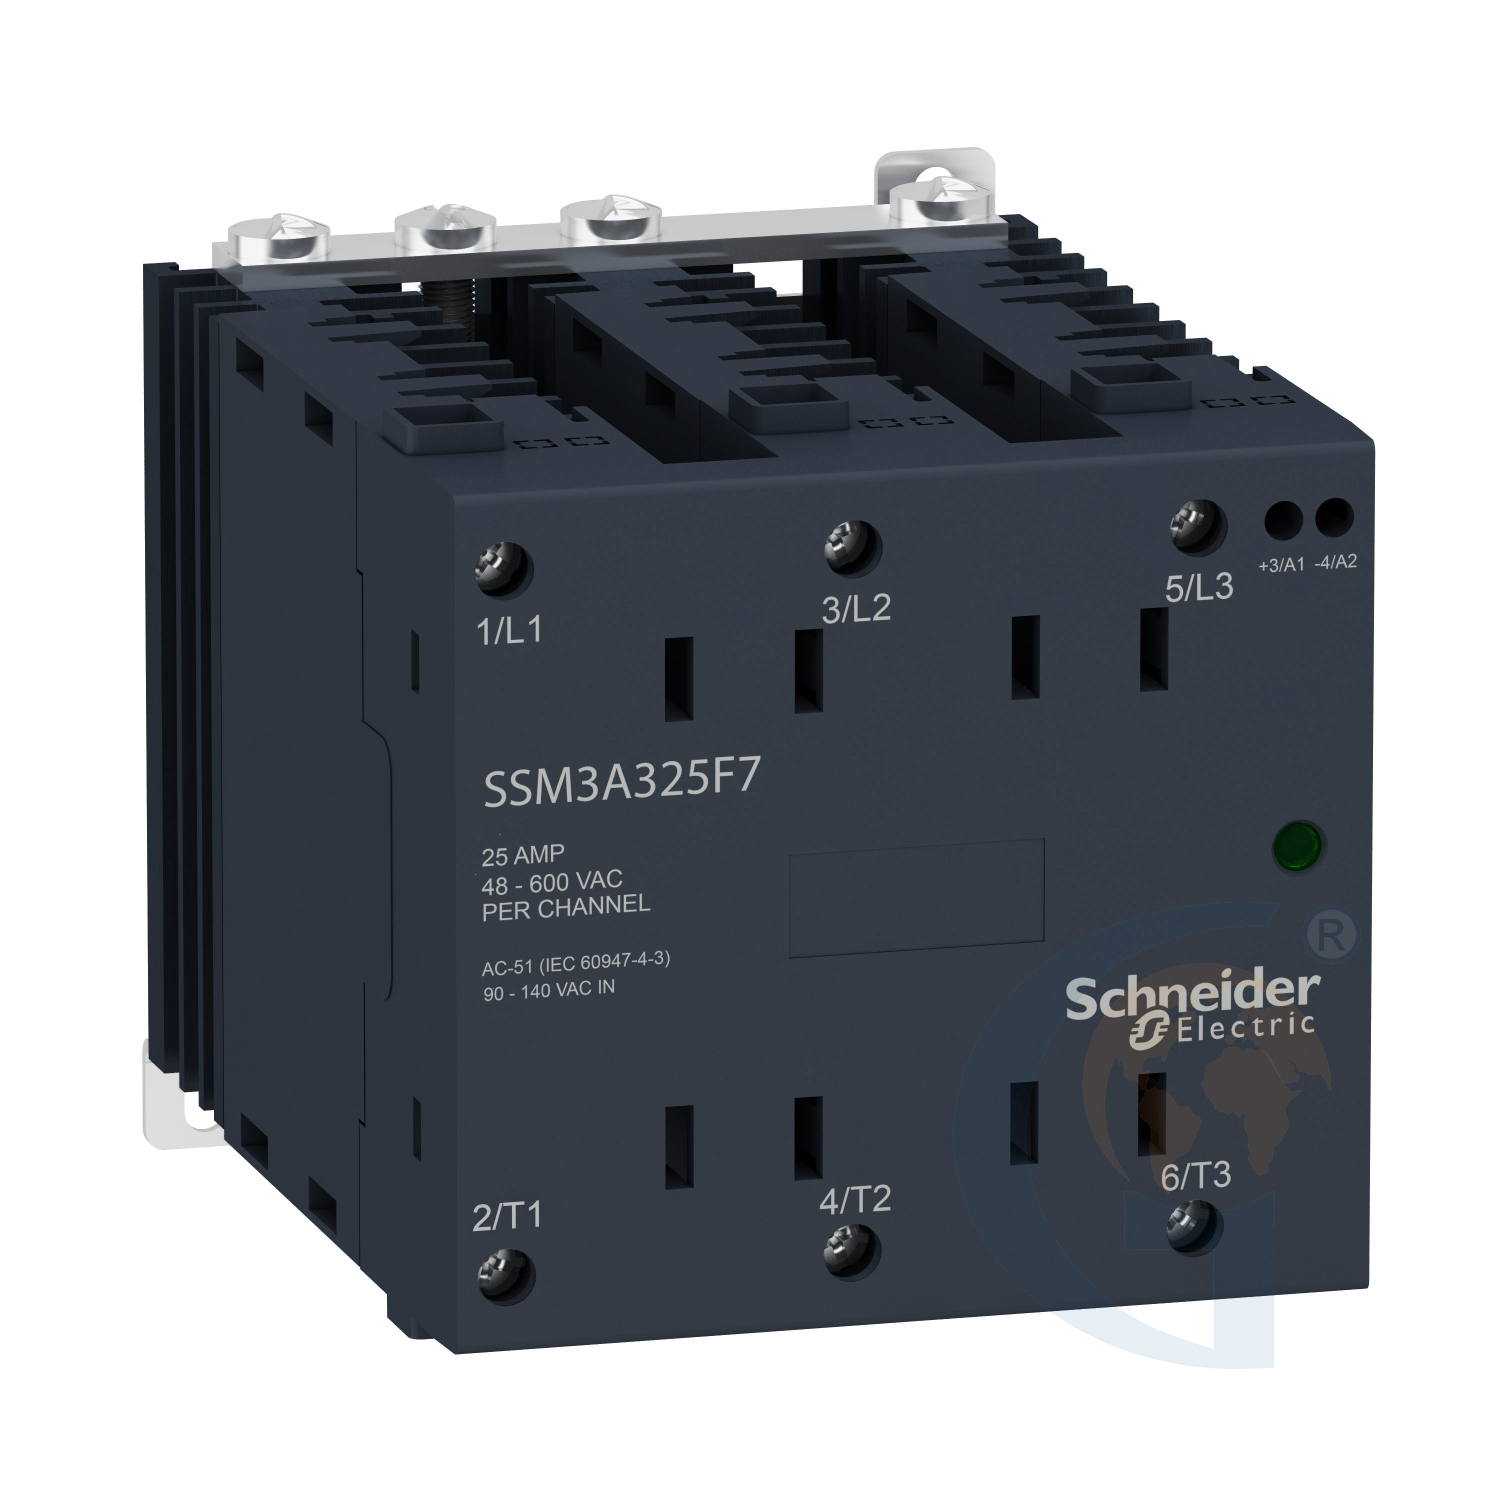 Schneider Electric SSM3A325F7 solid state relay – DIN rail mount – input 90-140Vac, output 48-600Vac, 25A https://gesrepair.com/wp-content/uploads/2020/Schneider/Schneider_Electric_SSM3A325F7_.jpg